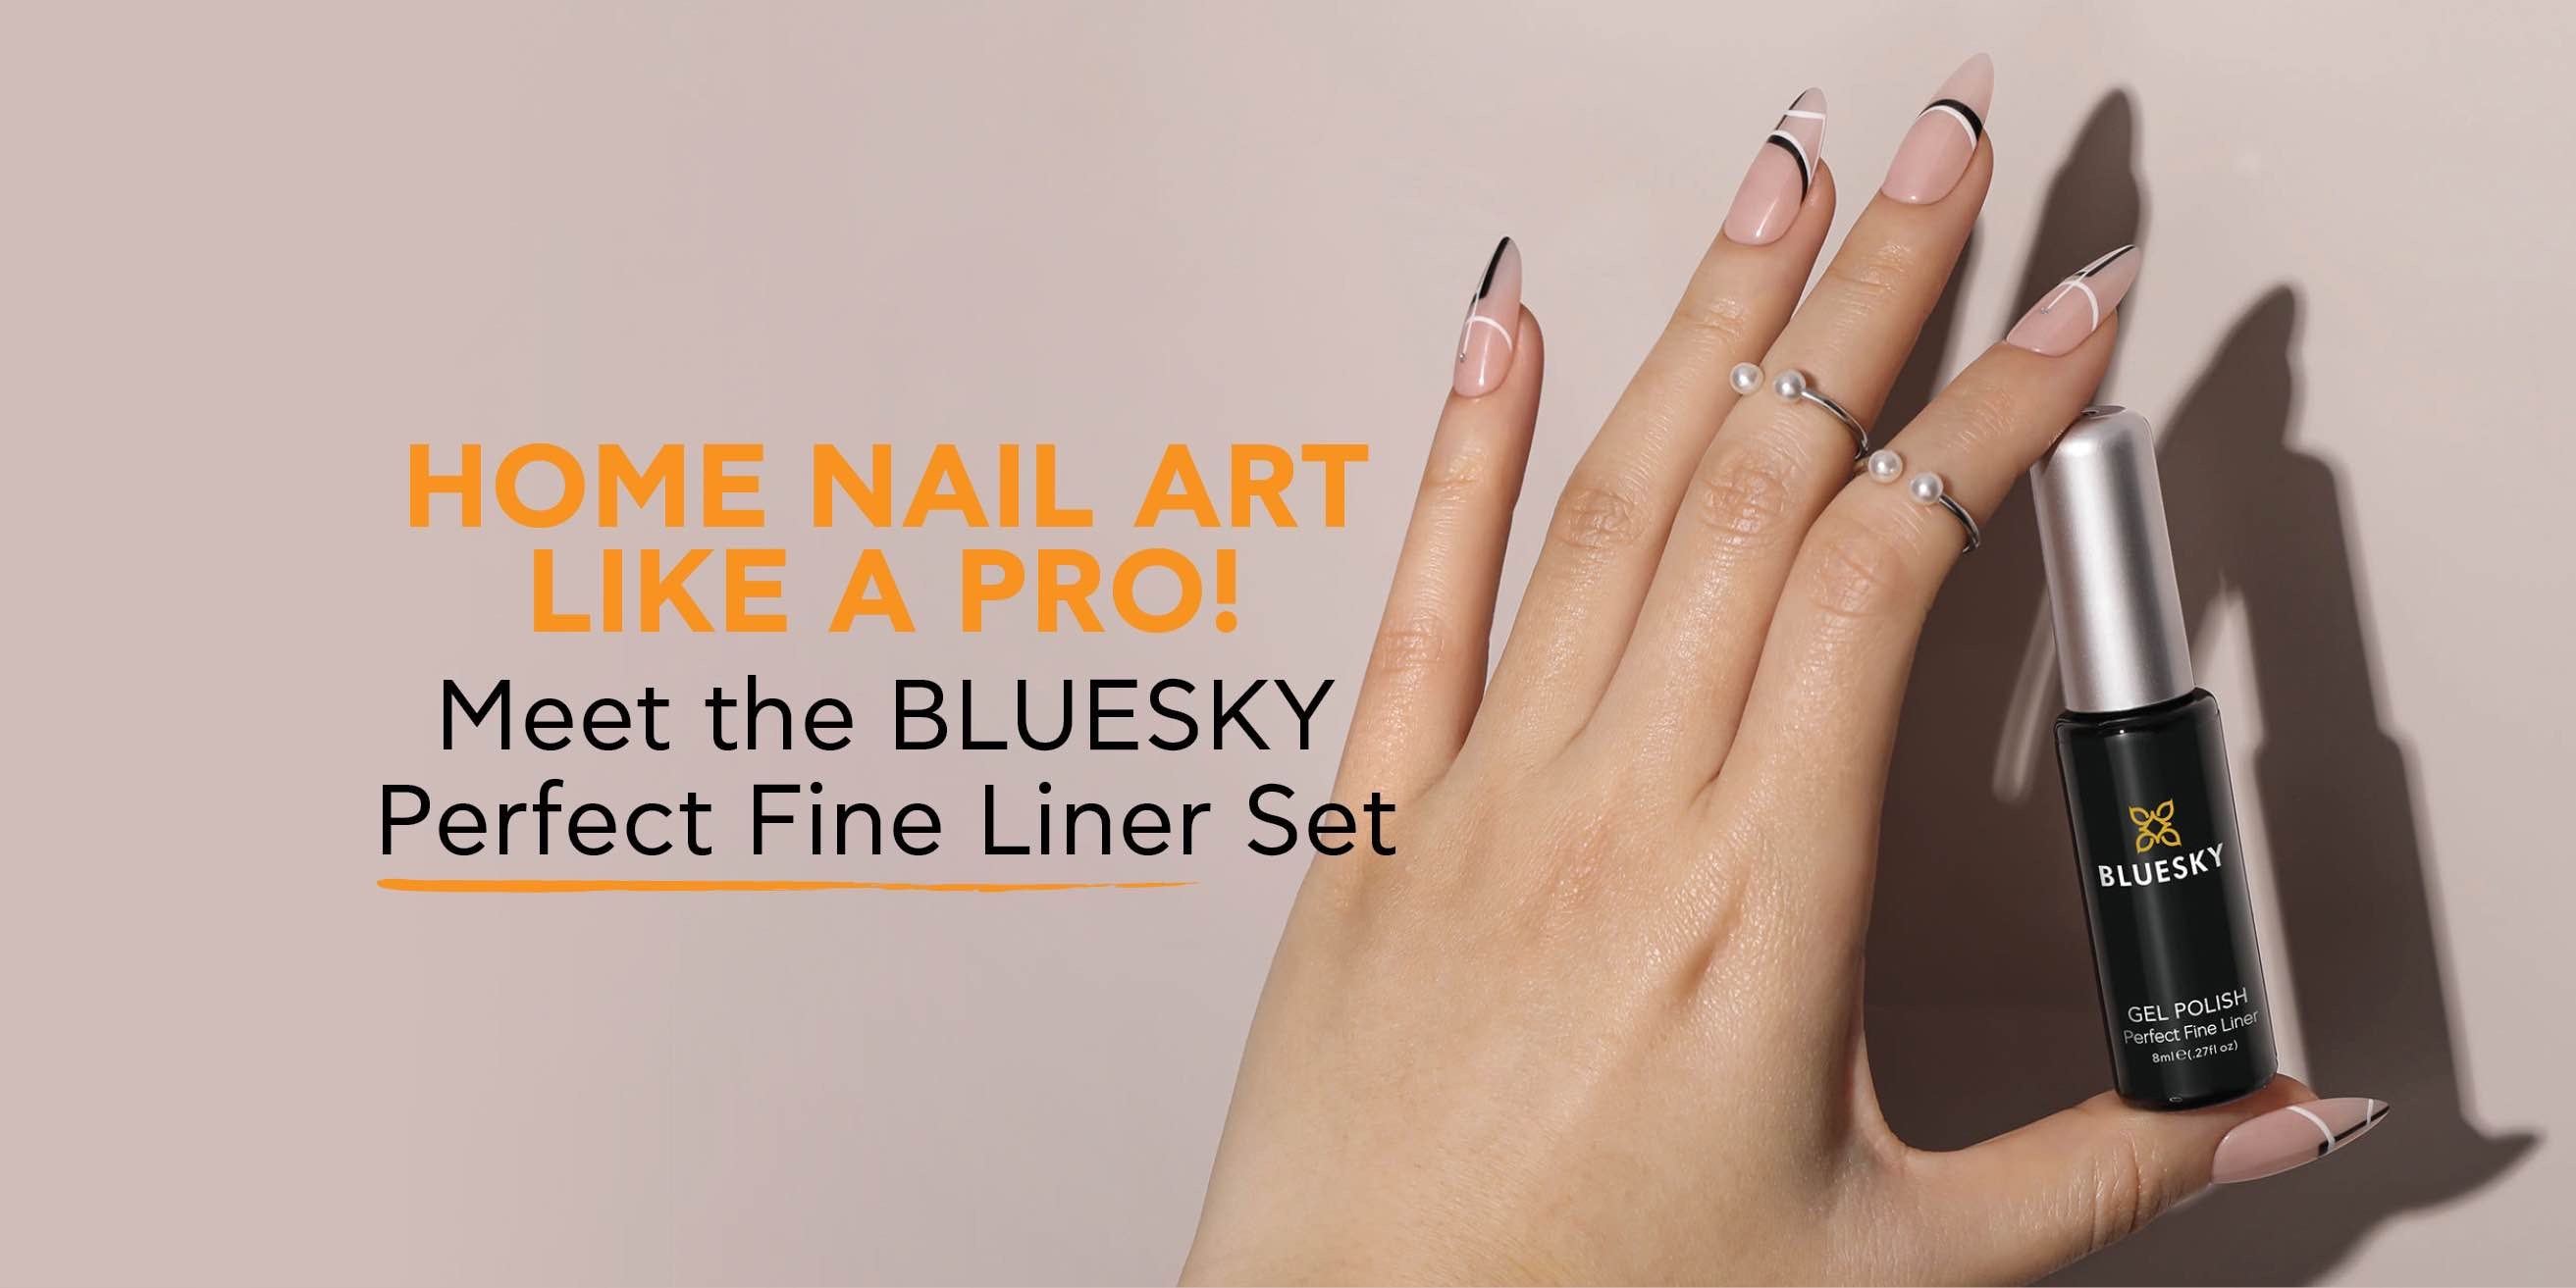 Home nail art like a pro! <br> Meet the BLUESKY Perfect Fine Liner Set